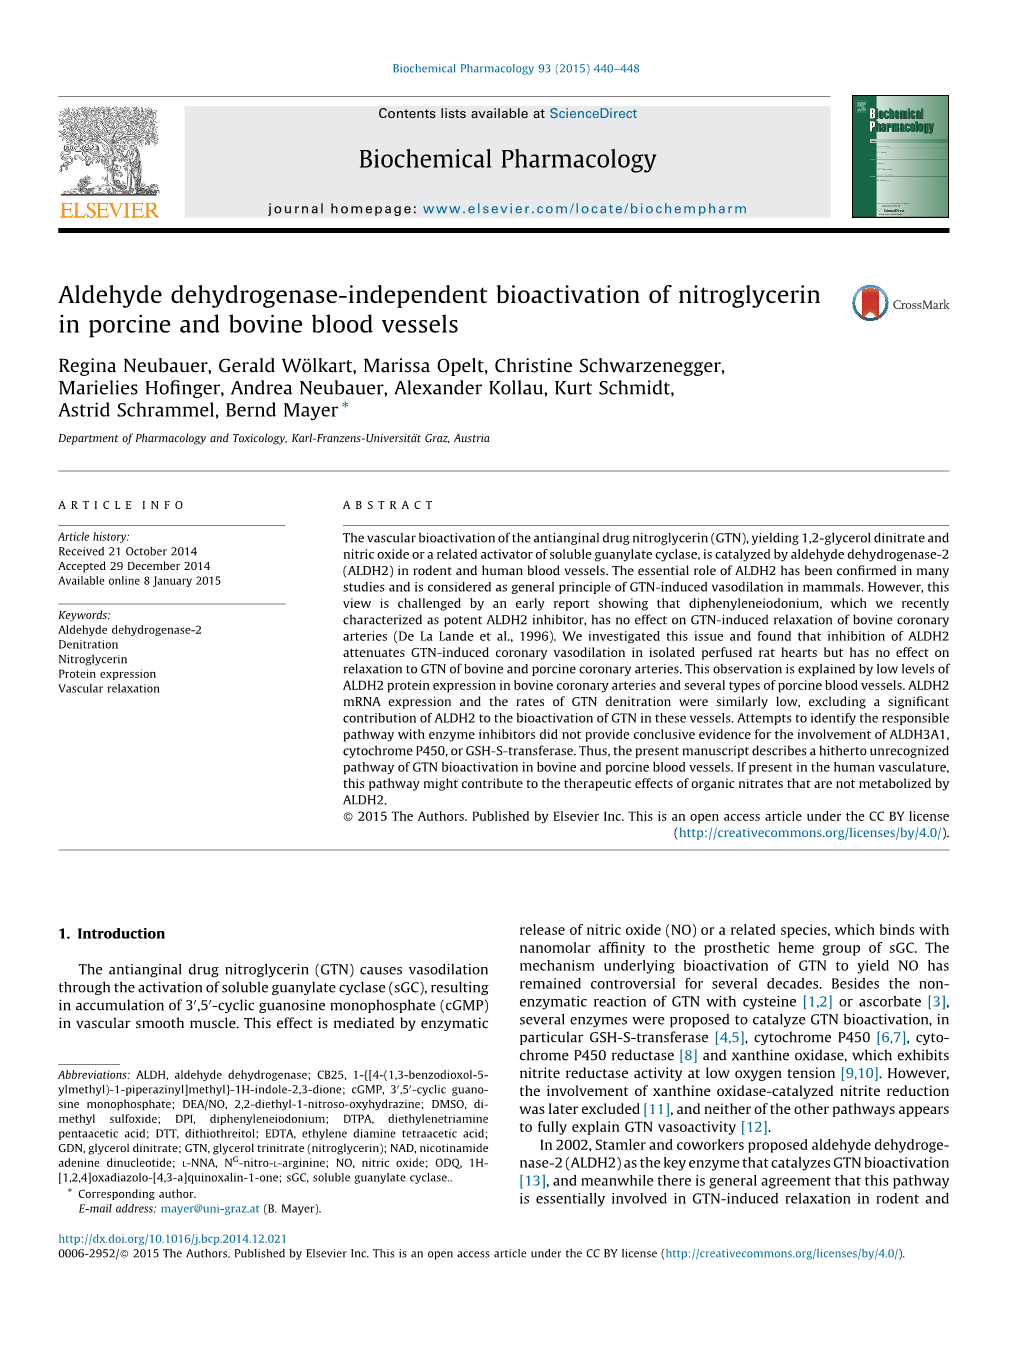 Aldehyde Dehydrogenase-Independent Bioactivation of Nitroglycerin